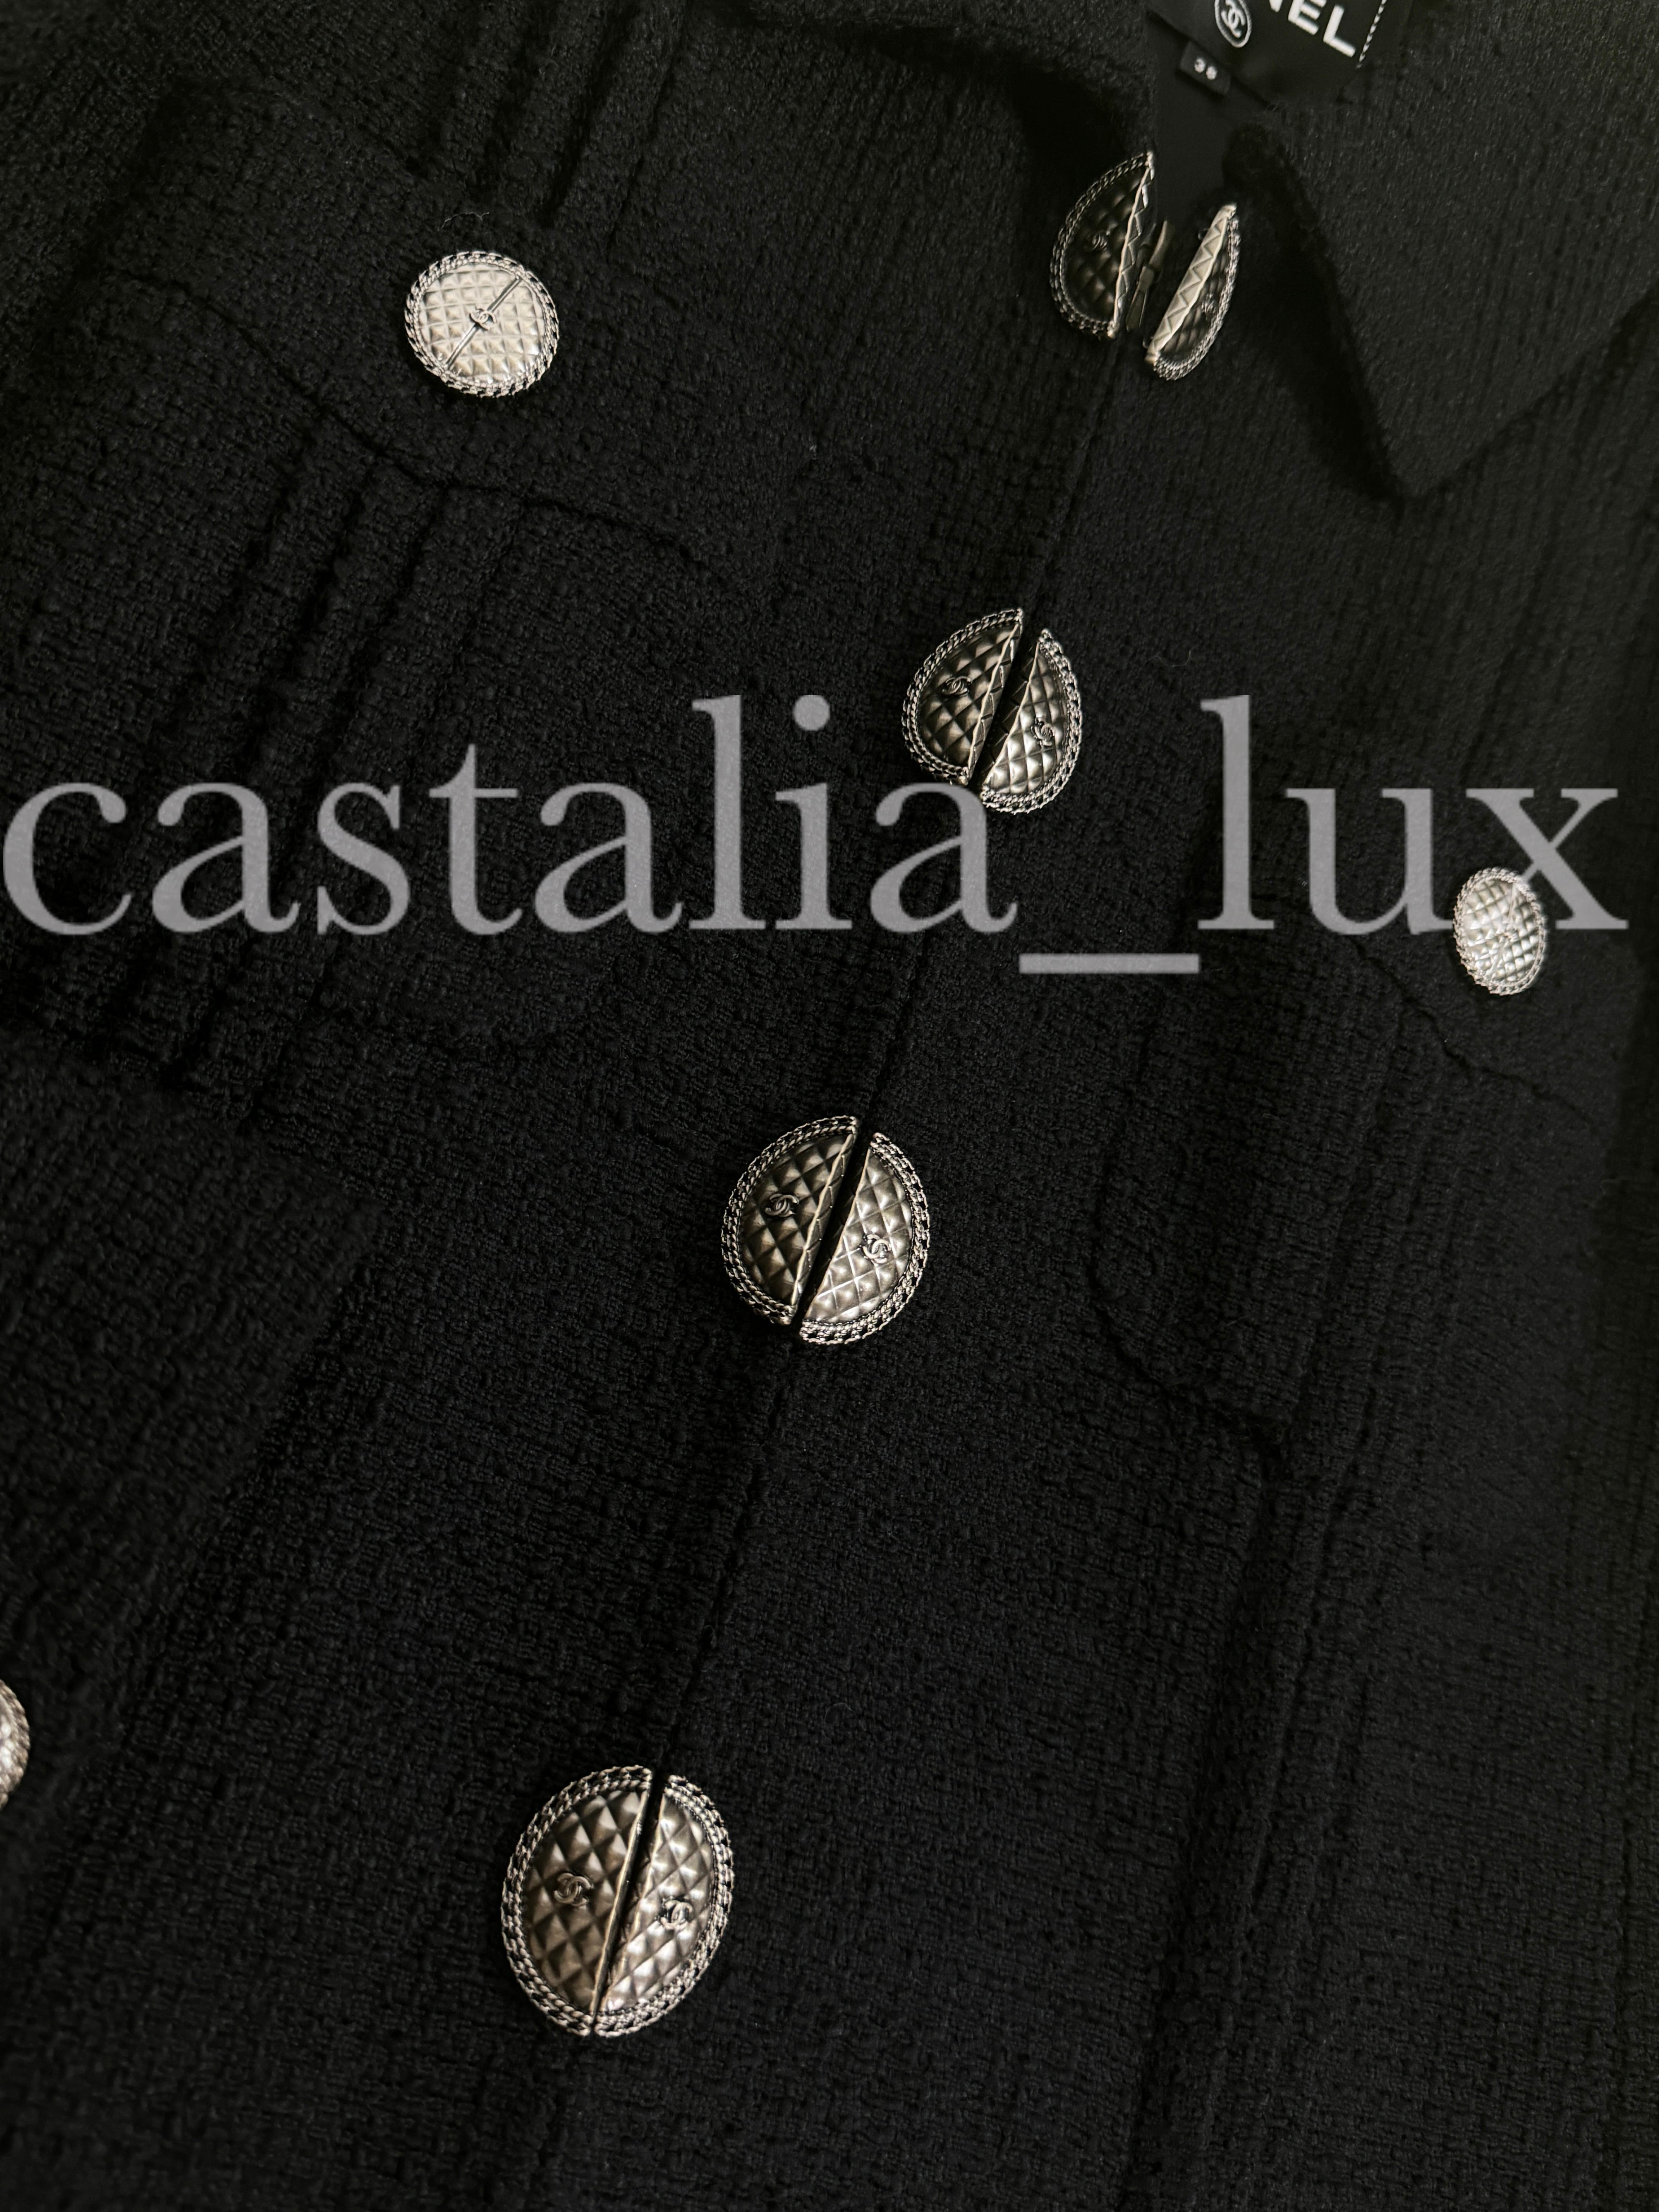 Chanel New Paris / Cuba Black Tweed Jacket  For Sale 8